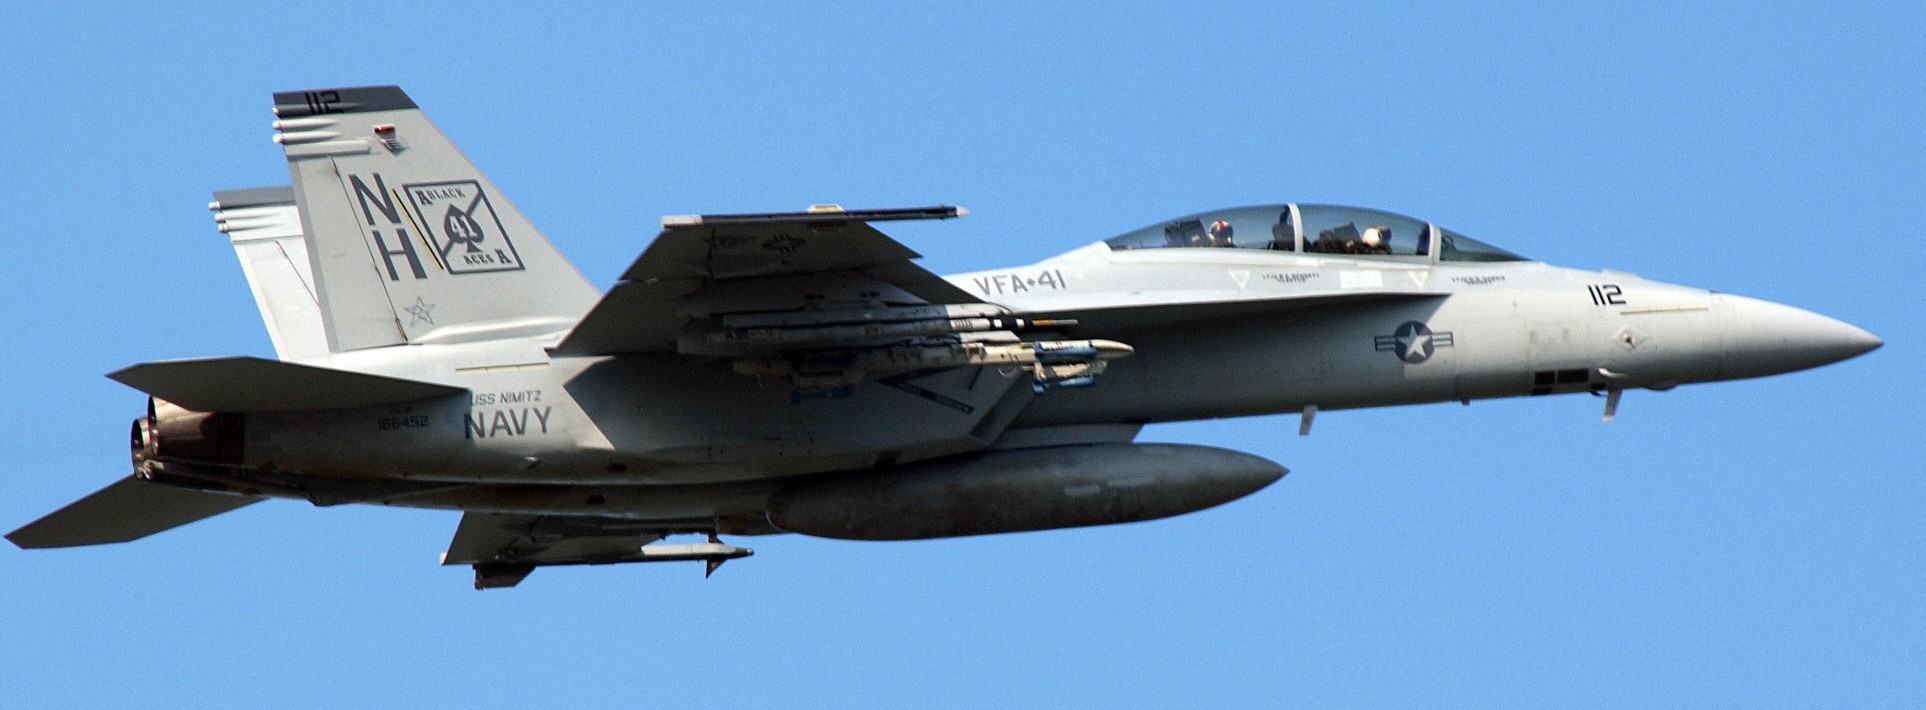 vfa-41 black aces strike fighter squadron f/a-18f super hornet cooperative thunder 206p